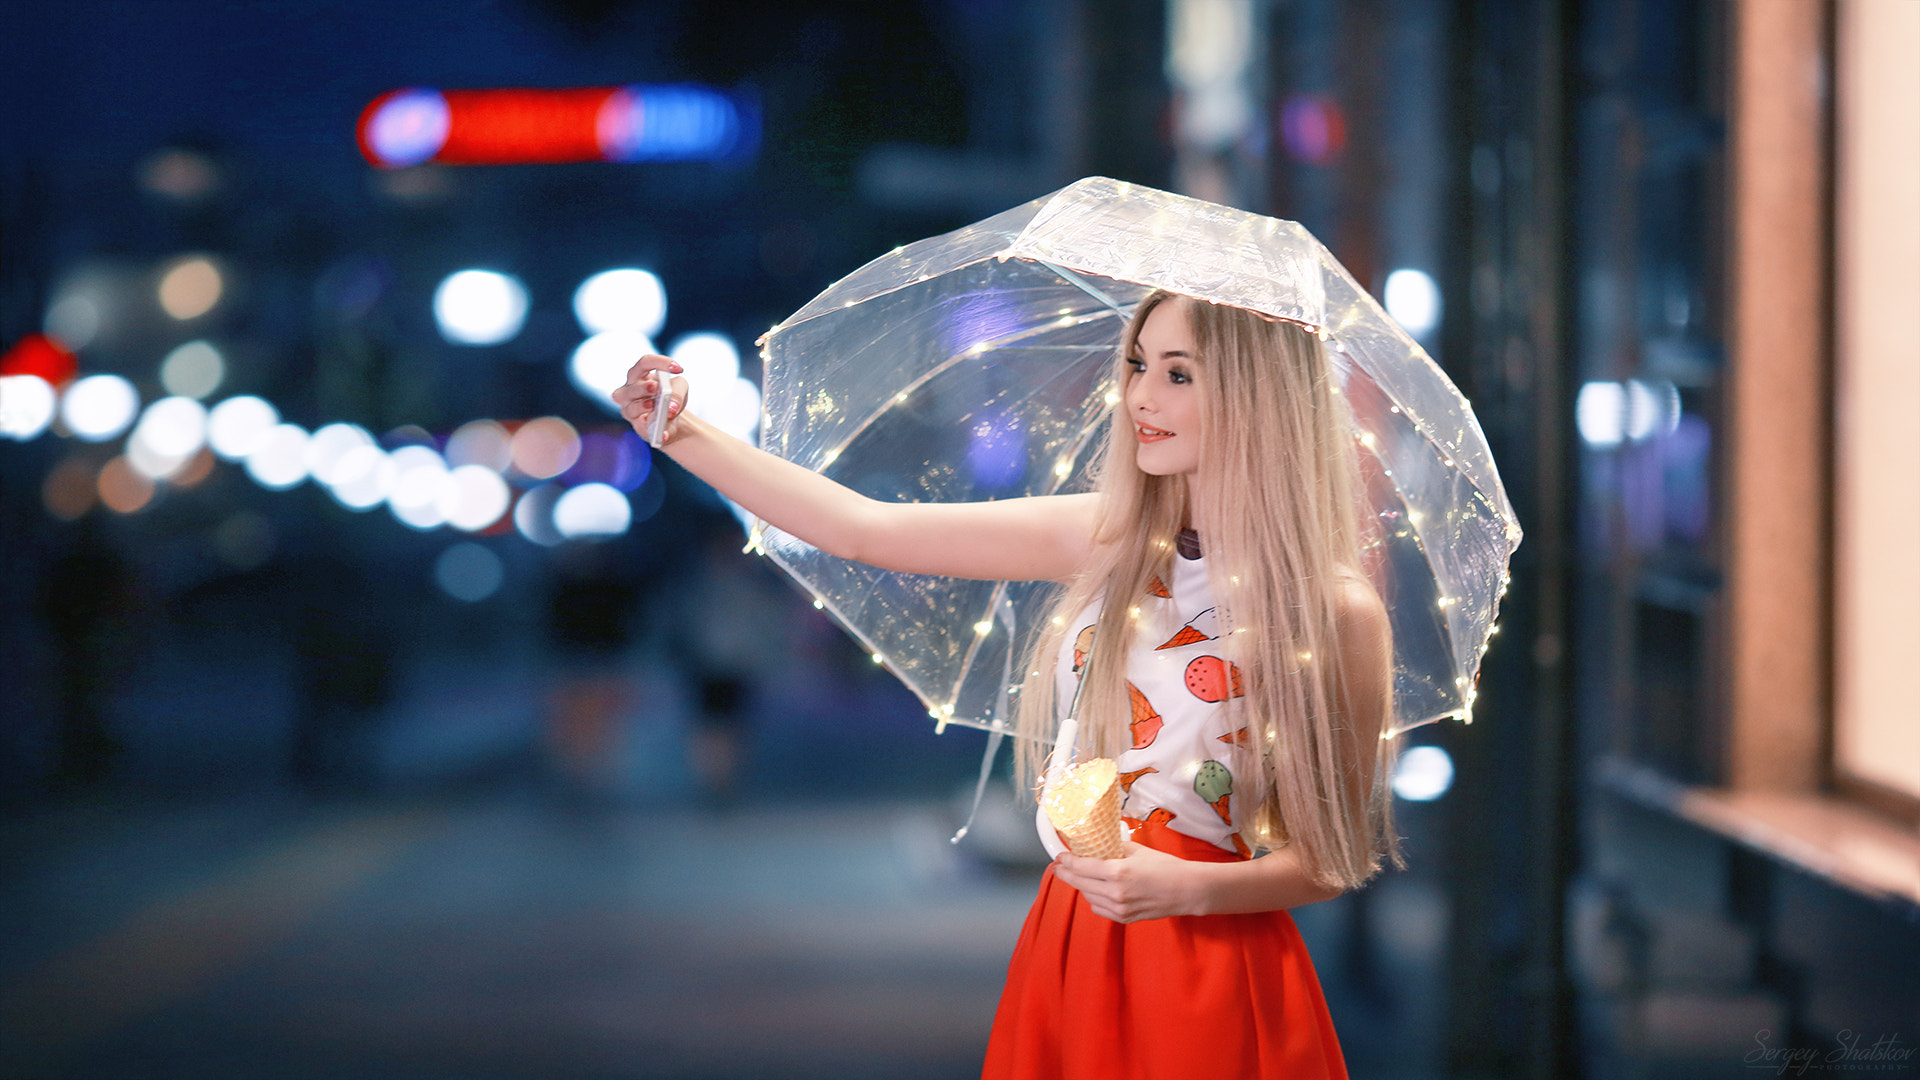 People 1920x1080 women model Sergey Shatskov urban selfies umbrella city night blonde 500px long hair skirt women outdoors women with umbrella straight hair red skirt one arm up smiling